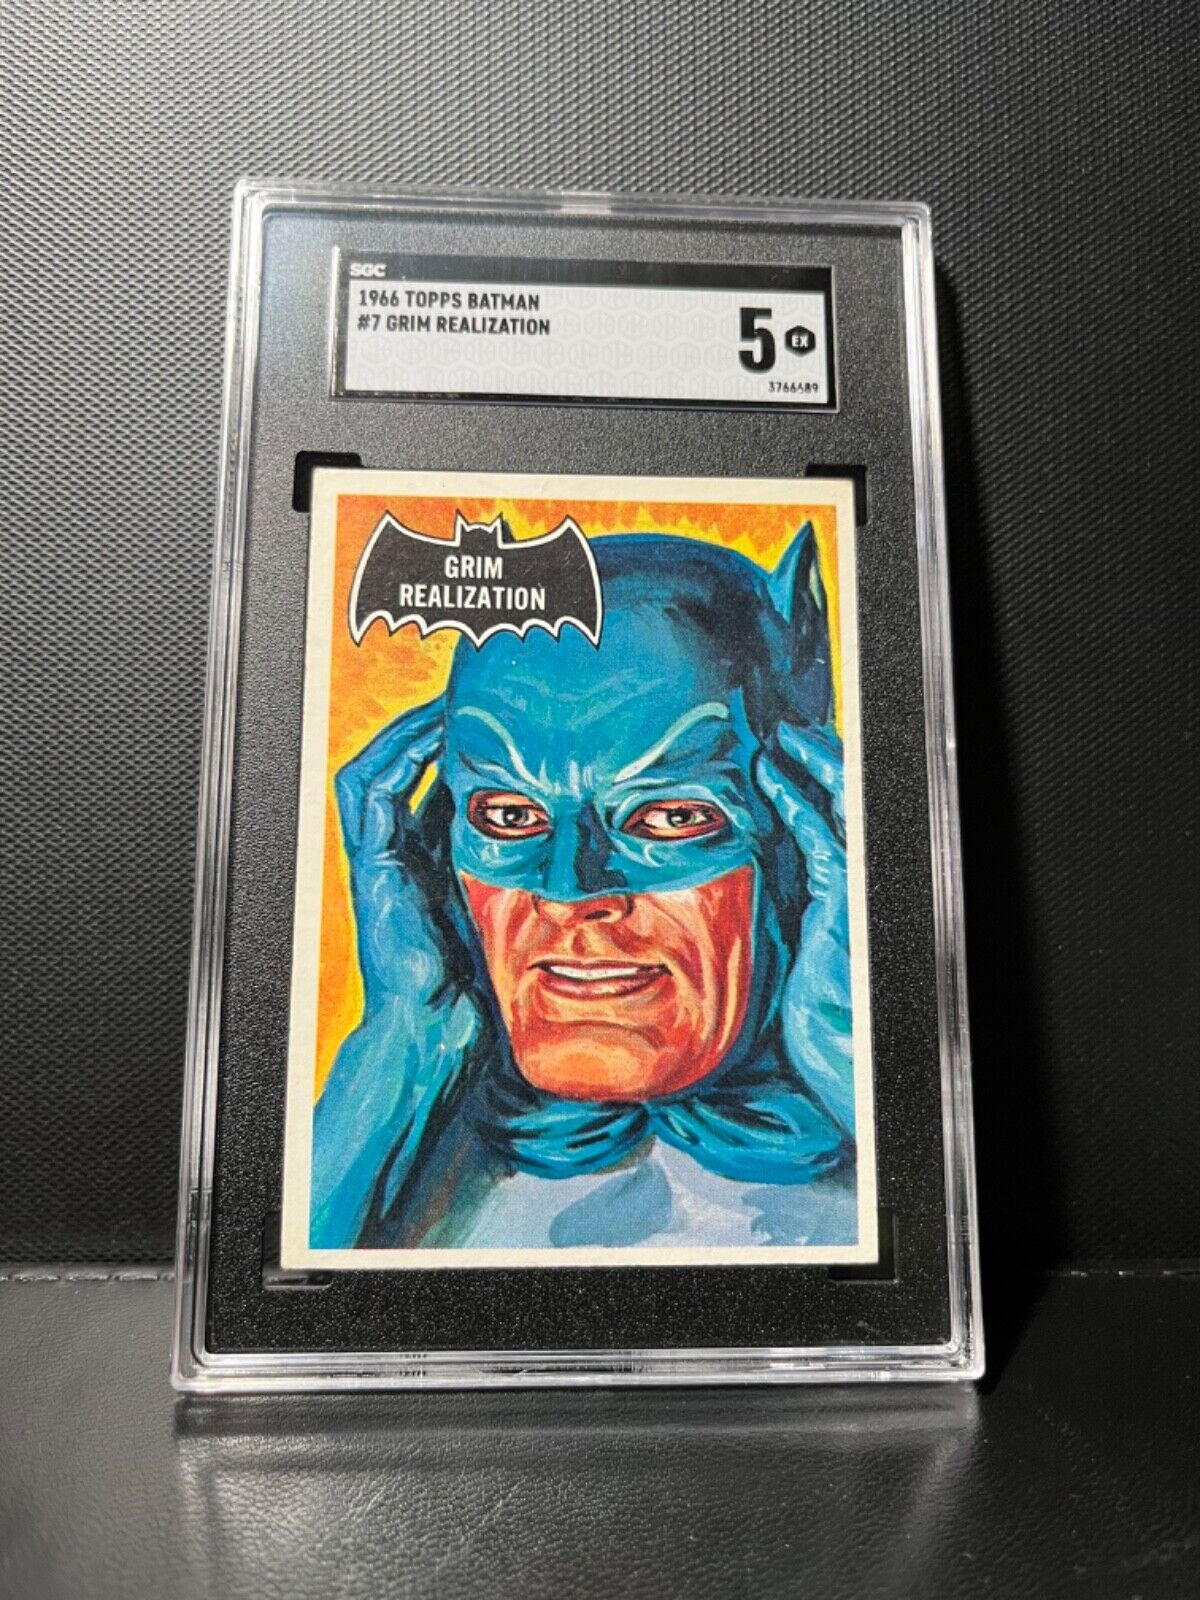 1966 Topps Batman Black Bat Grim Realization #7 SGC 5